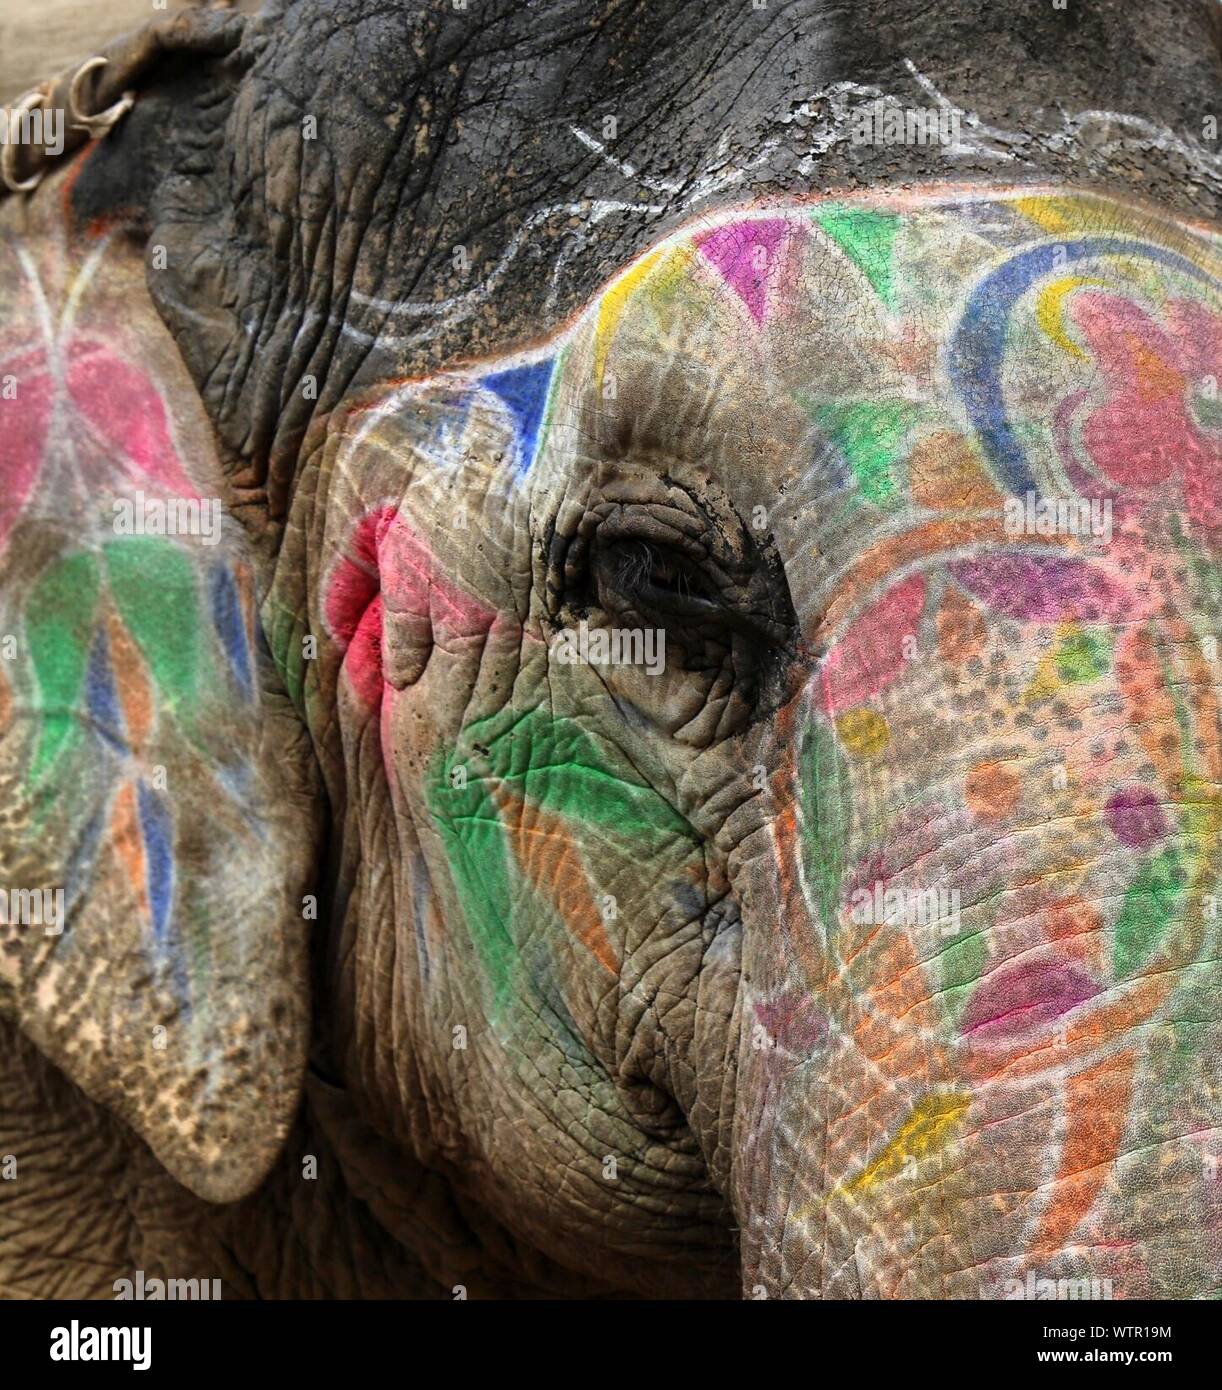 Detalle de un elefante pintado, Elephant Festival, Jaipur, Rajasthan, India  Fotografía de stock - Alamy